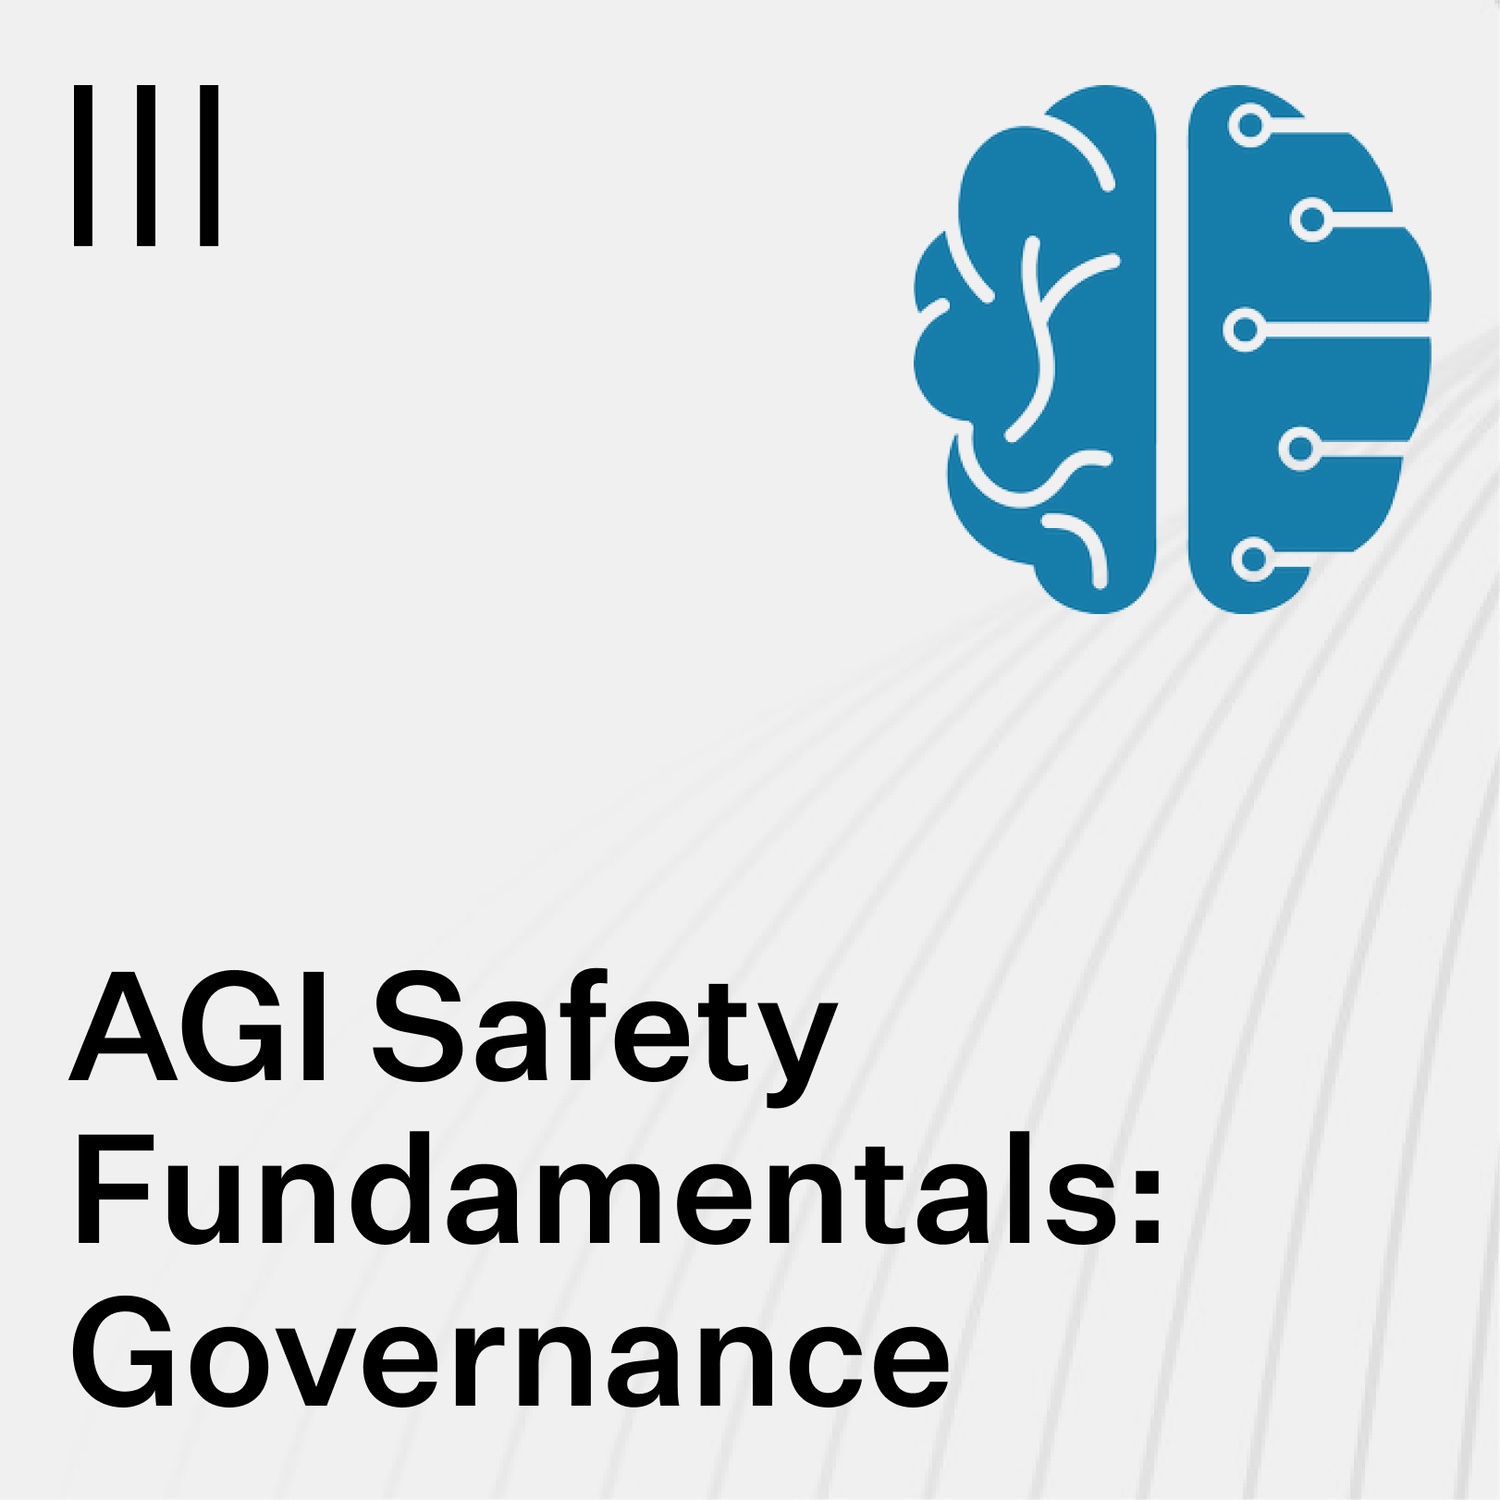 AGI Safety Fundamentals: Governance